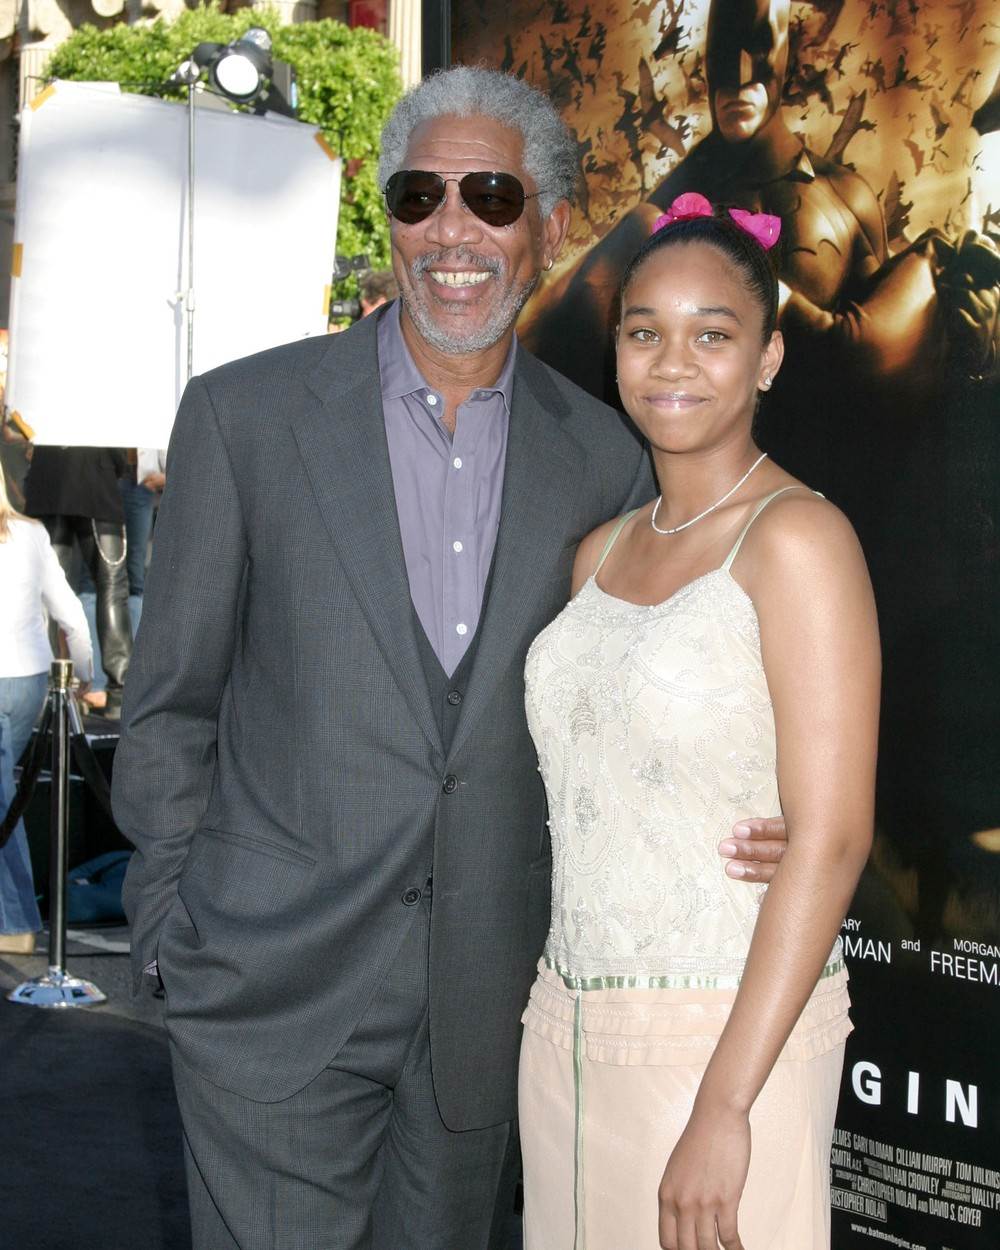 Morgan Freeman navodno je zlostavljao E'den Hines kad je bila mlađa